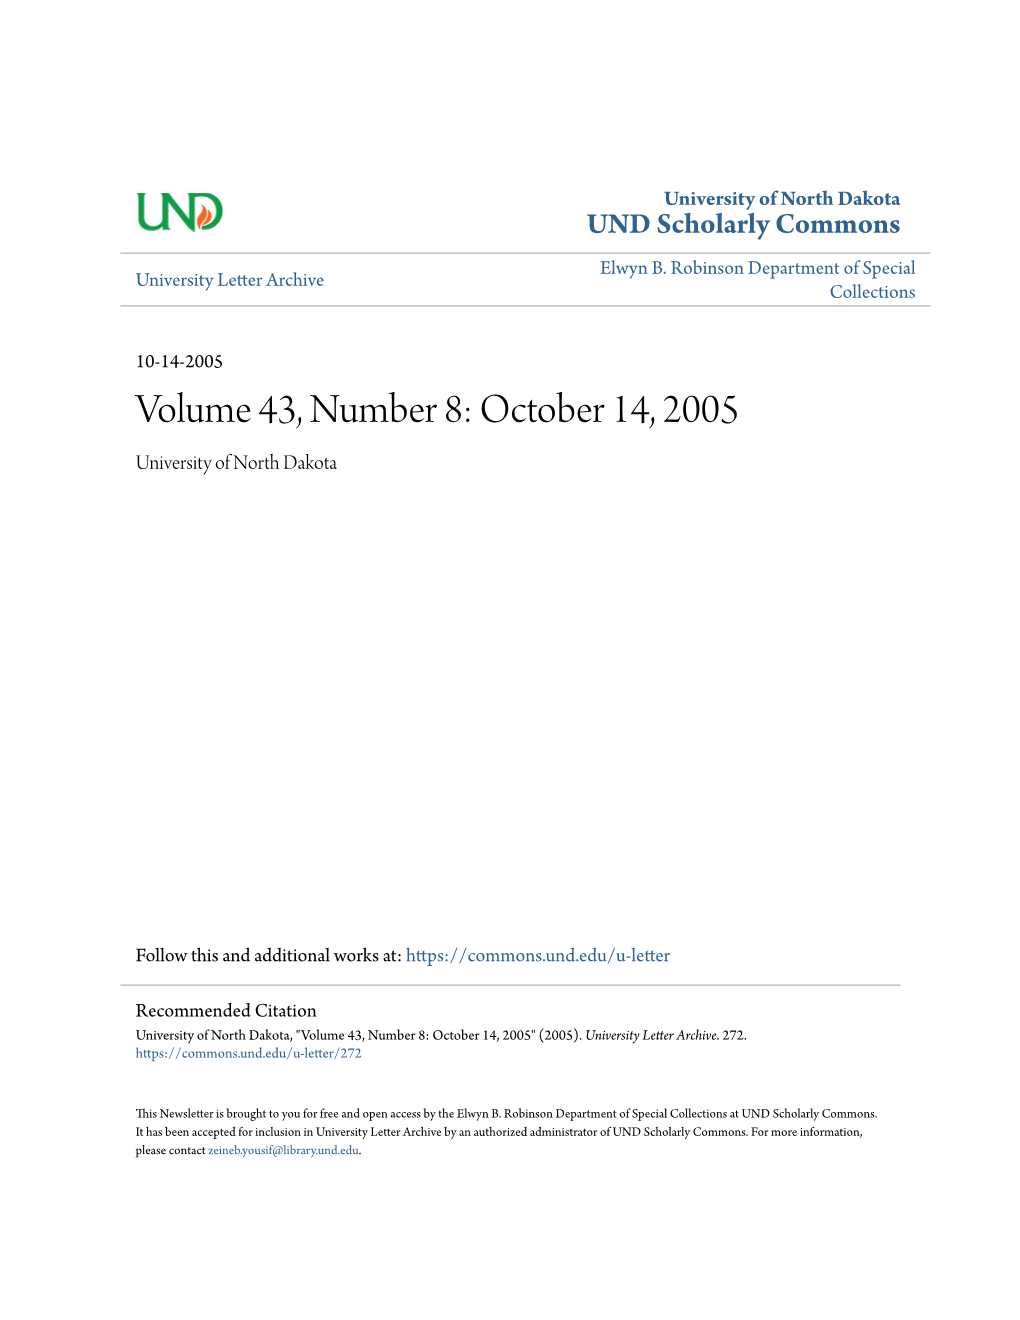 Volume 43, Number 8: October 14, 2005 University of North Dakota